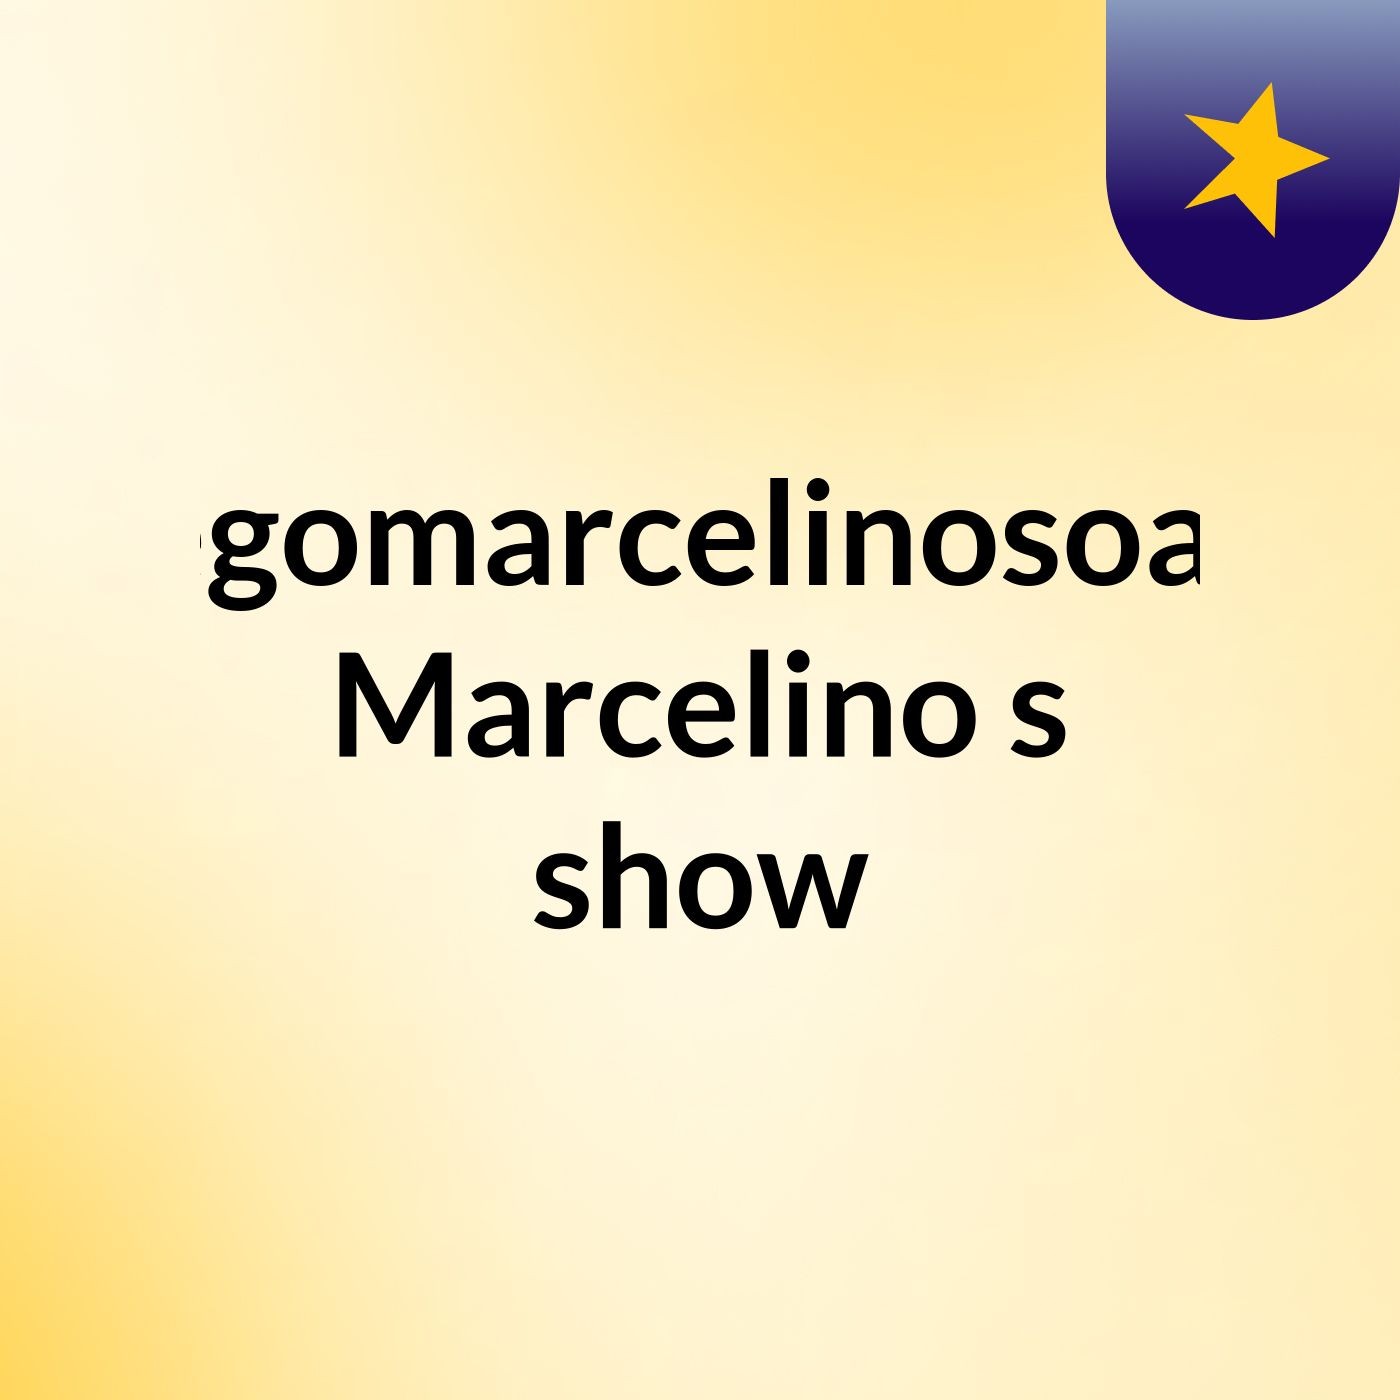 Diegomarcelinosoares Marcelino's show